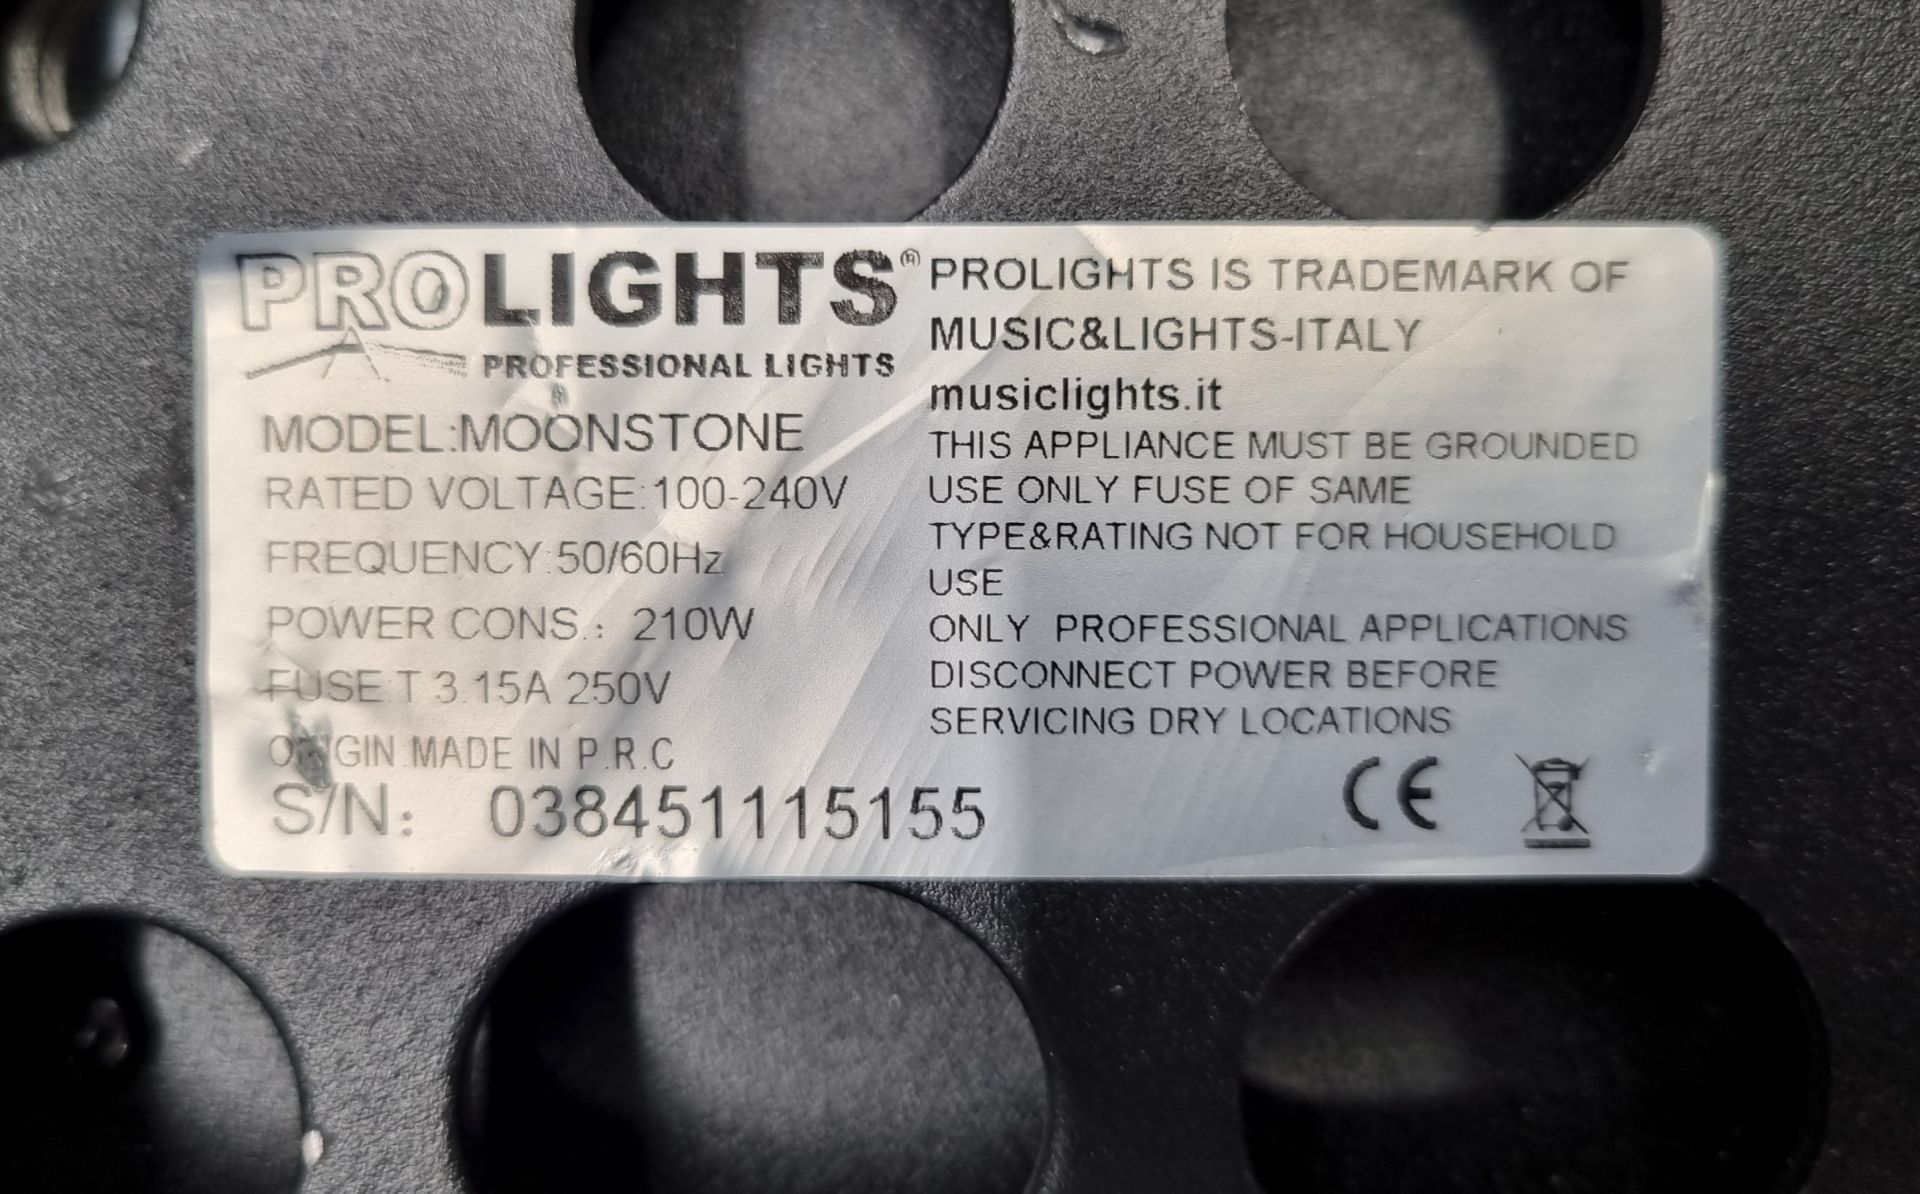 2x Prolights Moonstone LED spot moving head lights with flight case - Image 11 of 12